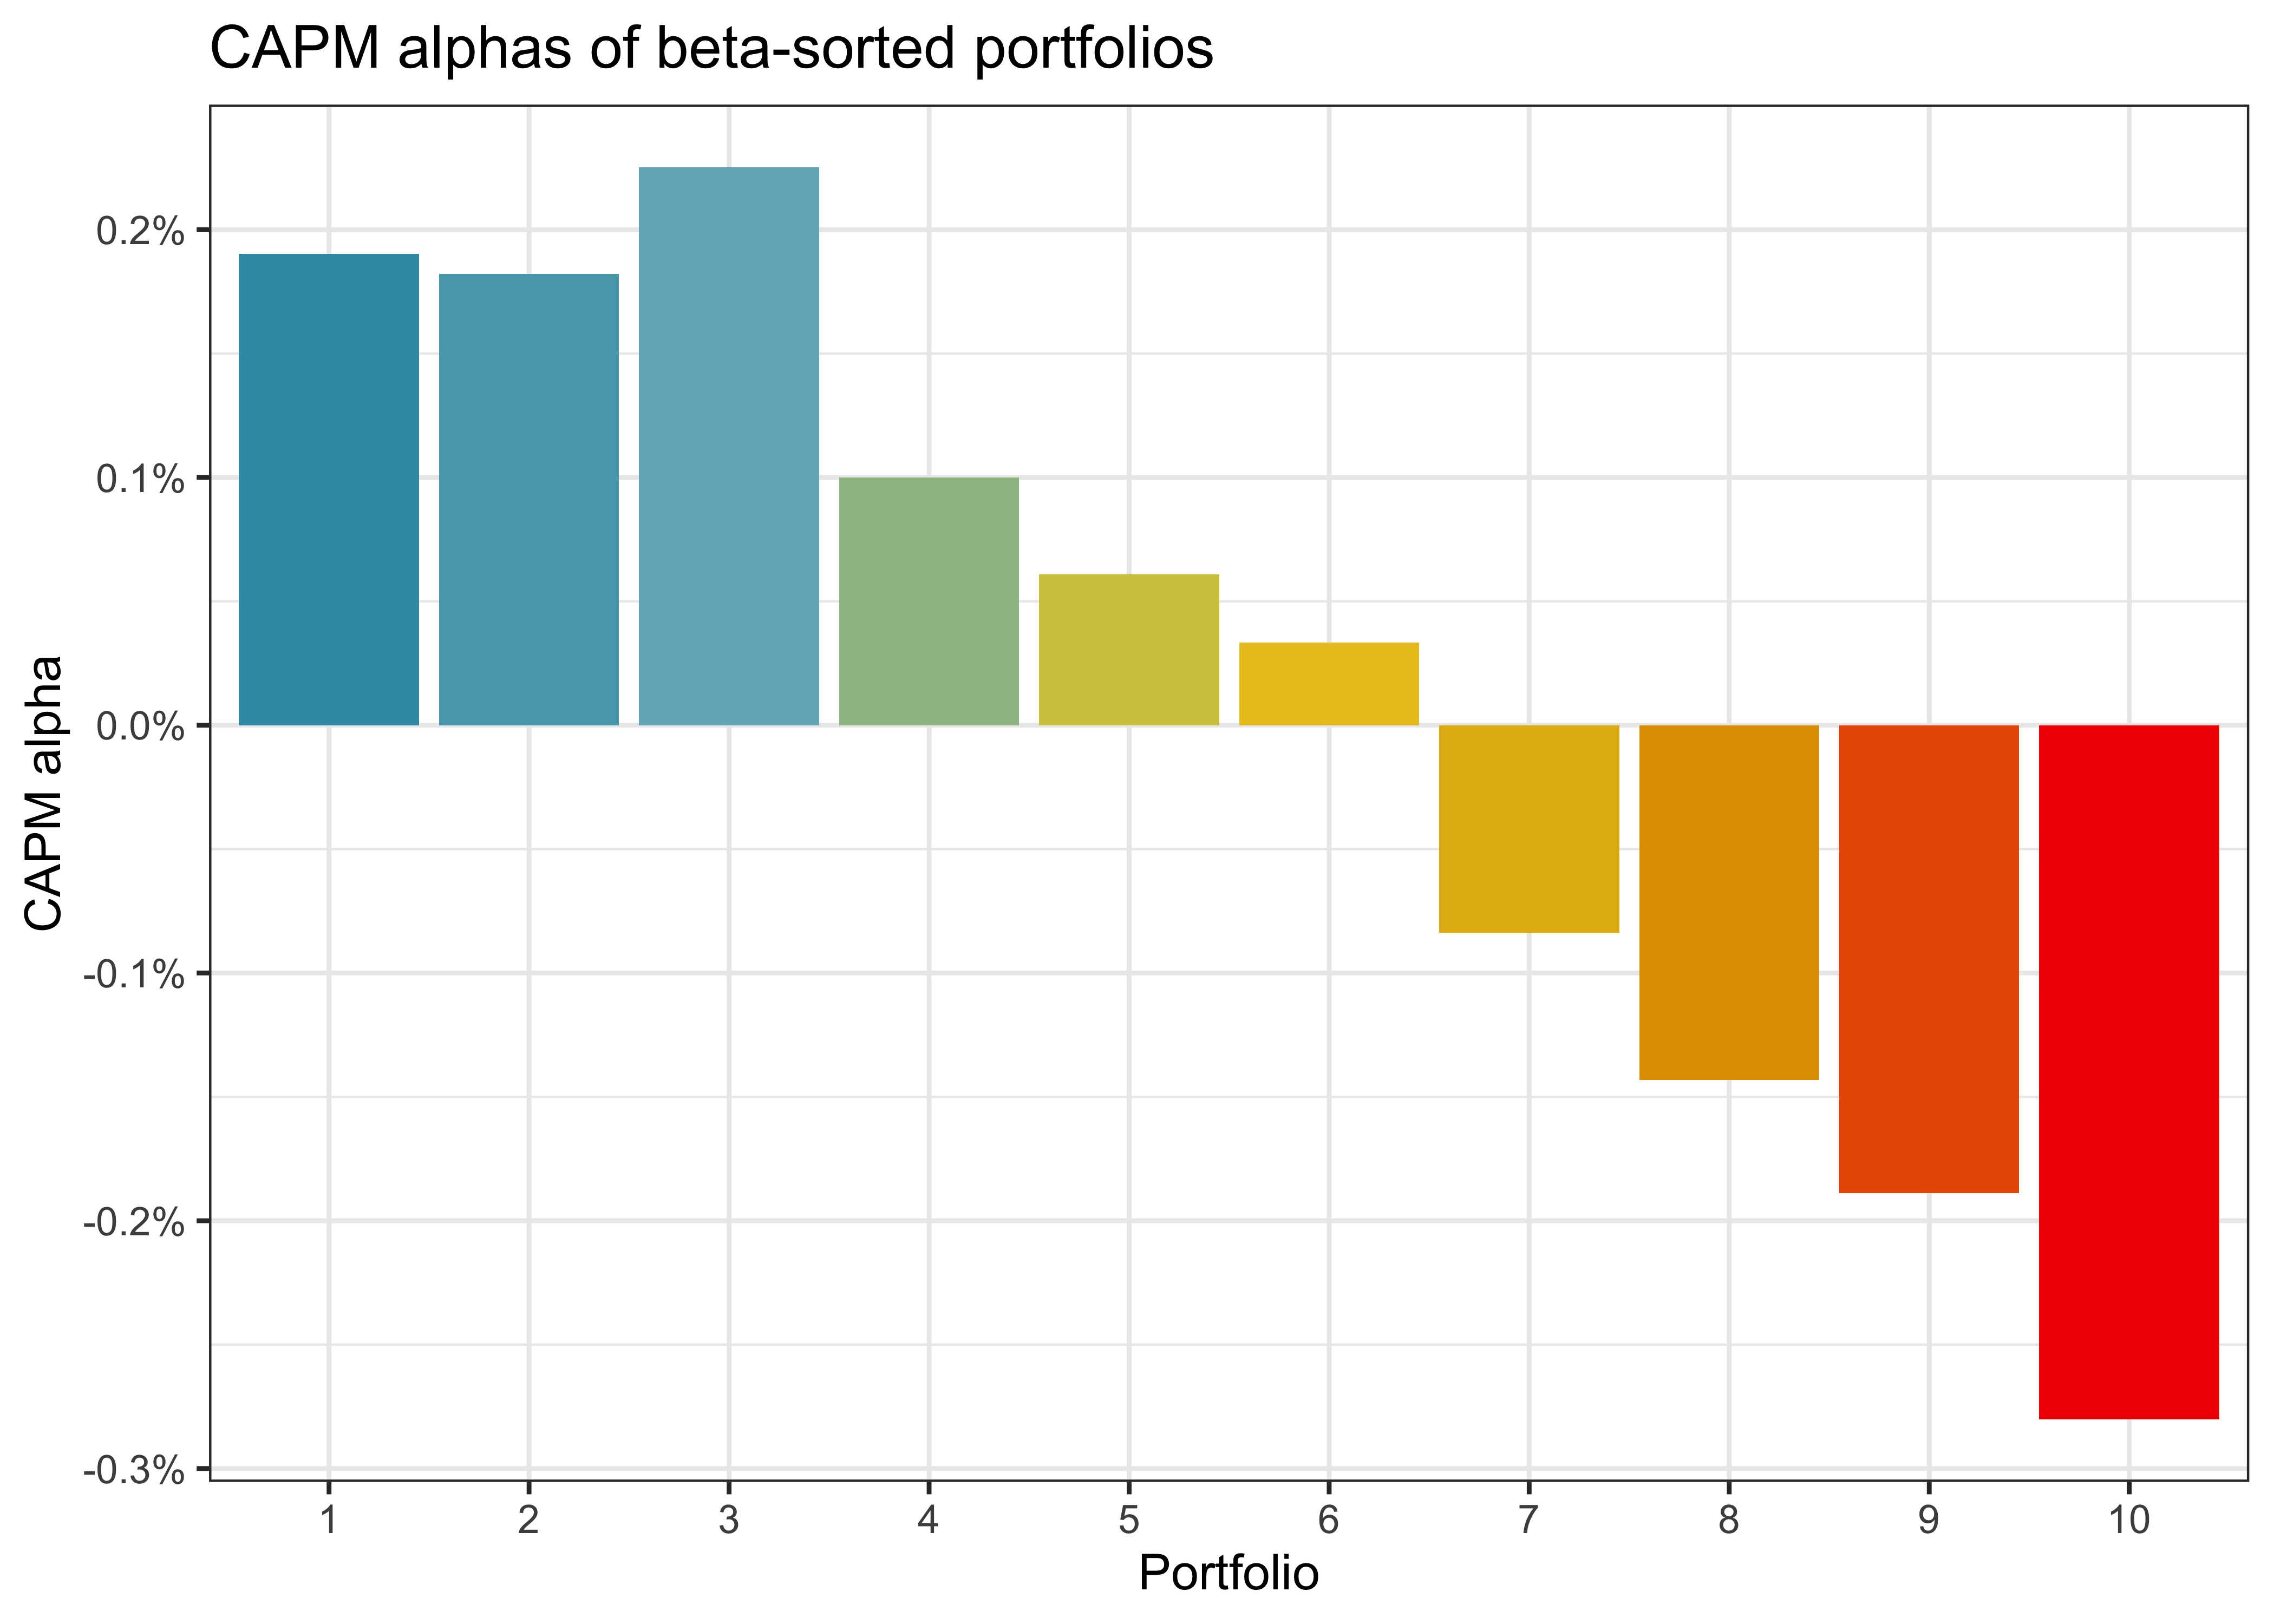 Title: CAPM alphas of beta-sorted portfolios. The figure shows bar charts of alphas of beta-sorted portfolios with the decile portfolio on the horizontal axis and the corresponding CAPM alpha on the vertical axis. Alphas for low beta portfolios are positive, while high beta portfolios show negative alphas.